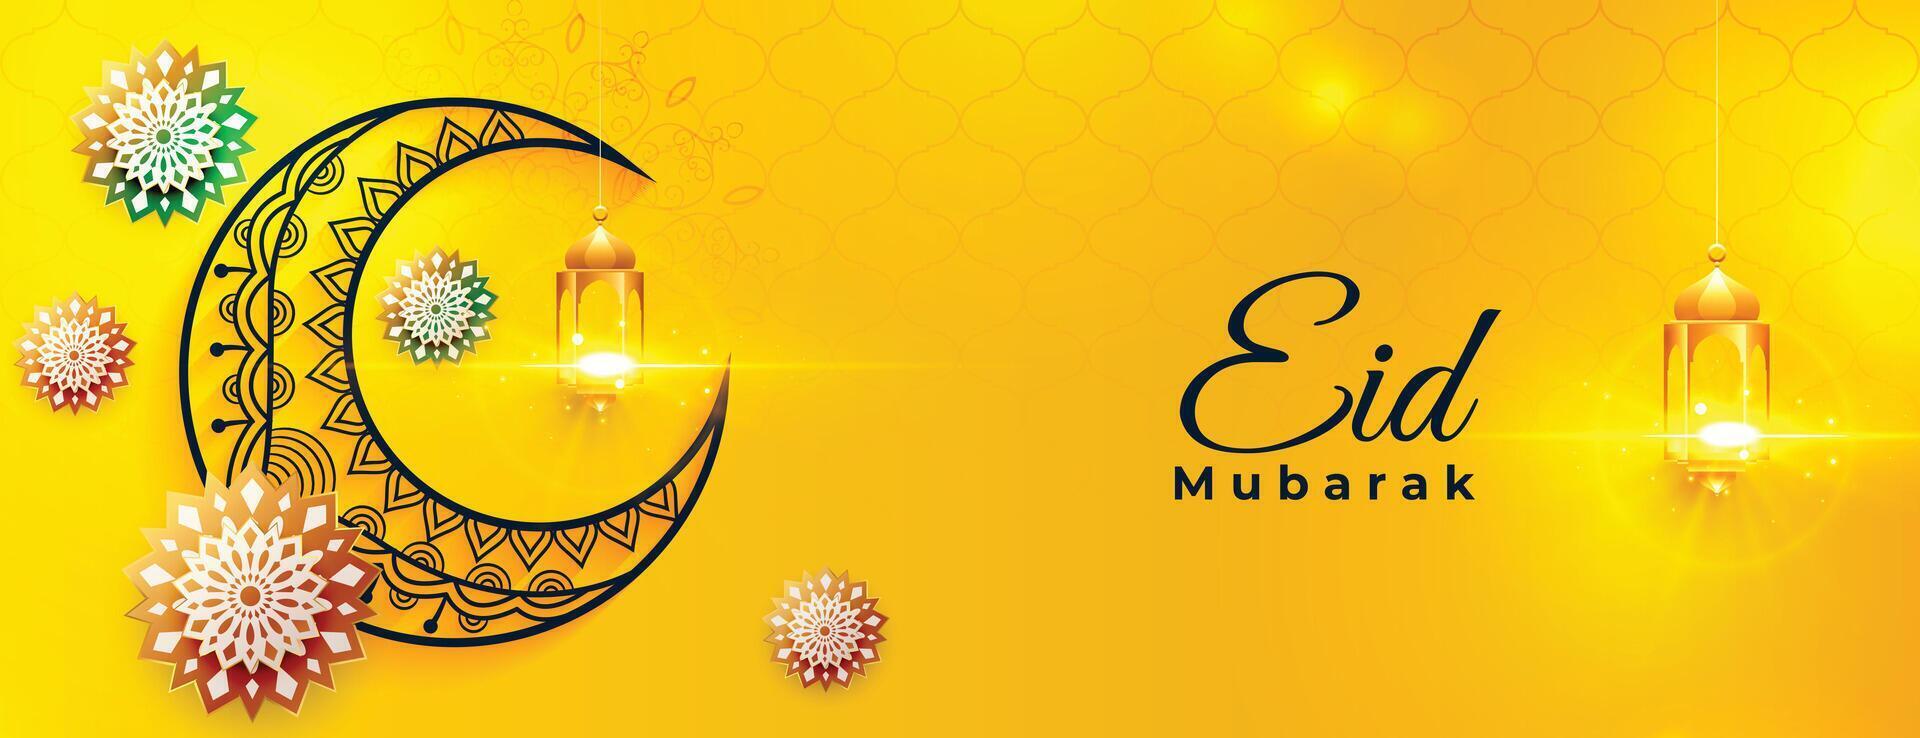 nett Gelb eid Mubarak islamisch Banner Design vektor